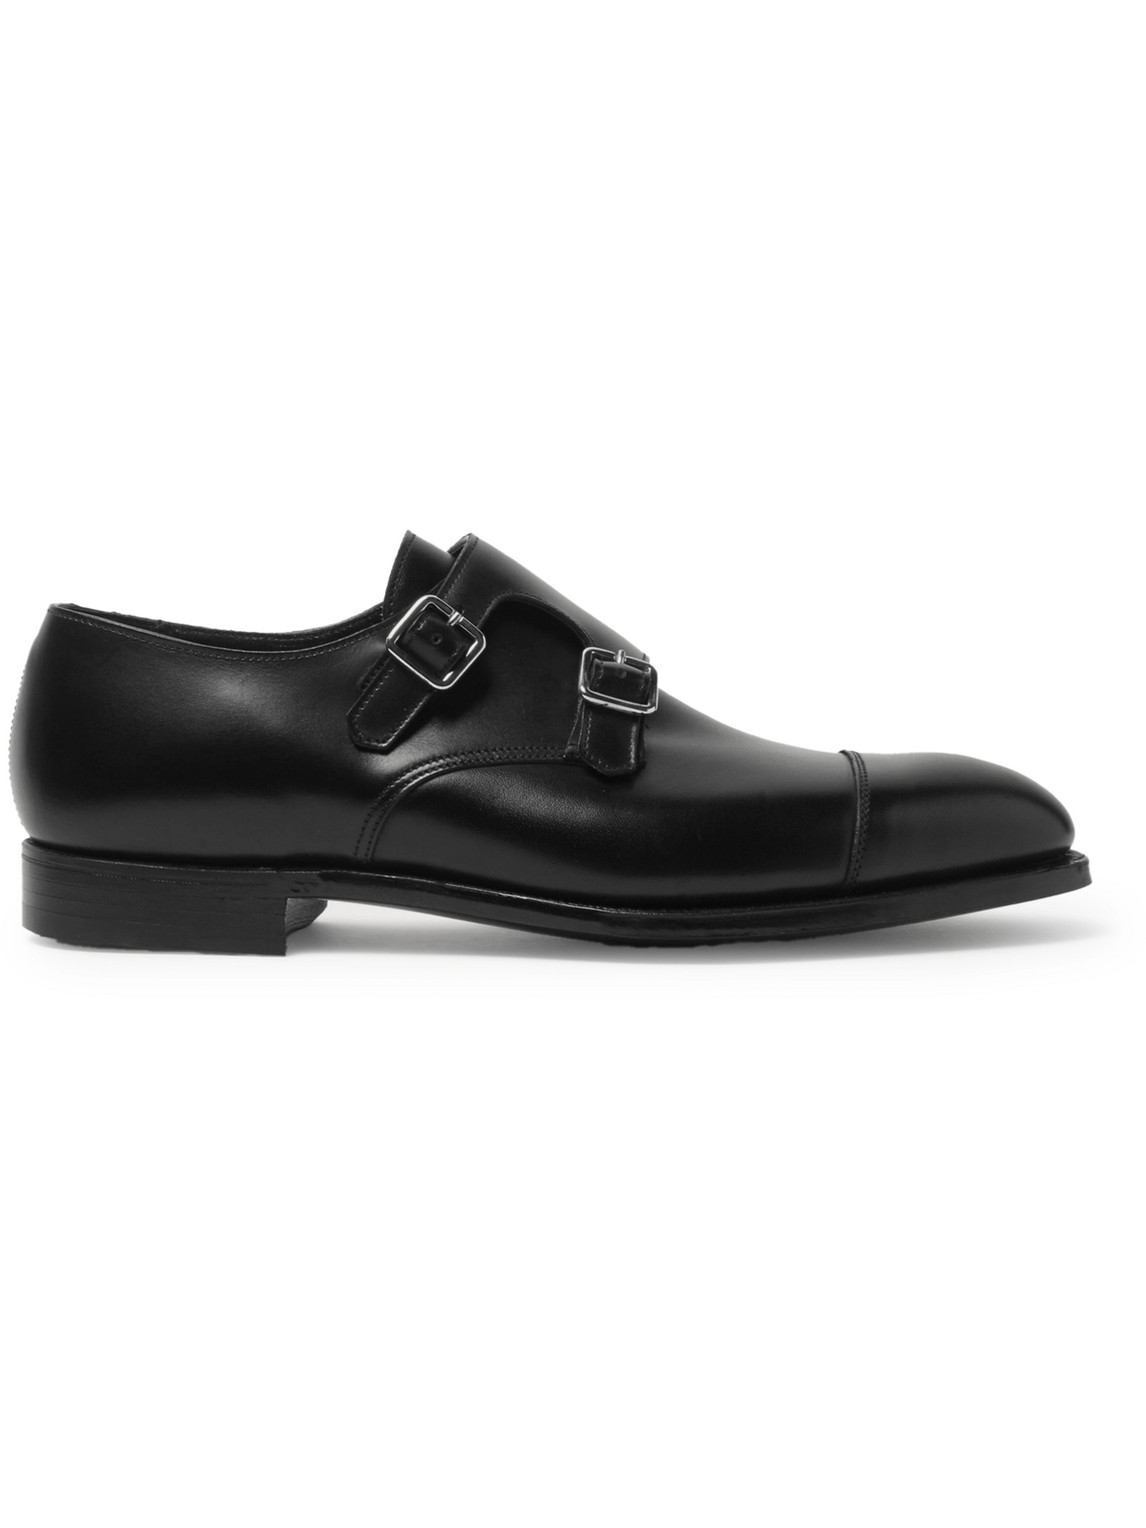 Thomas Cap-Toe Leather Monk-Strap Shoes